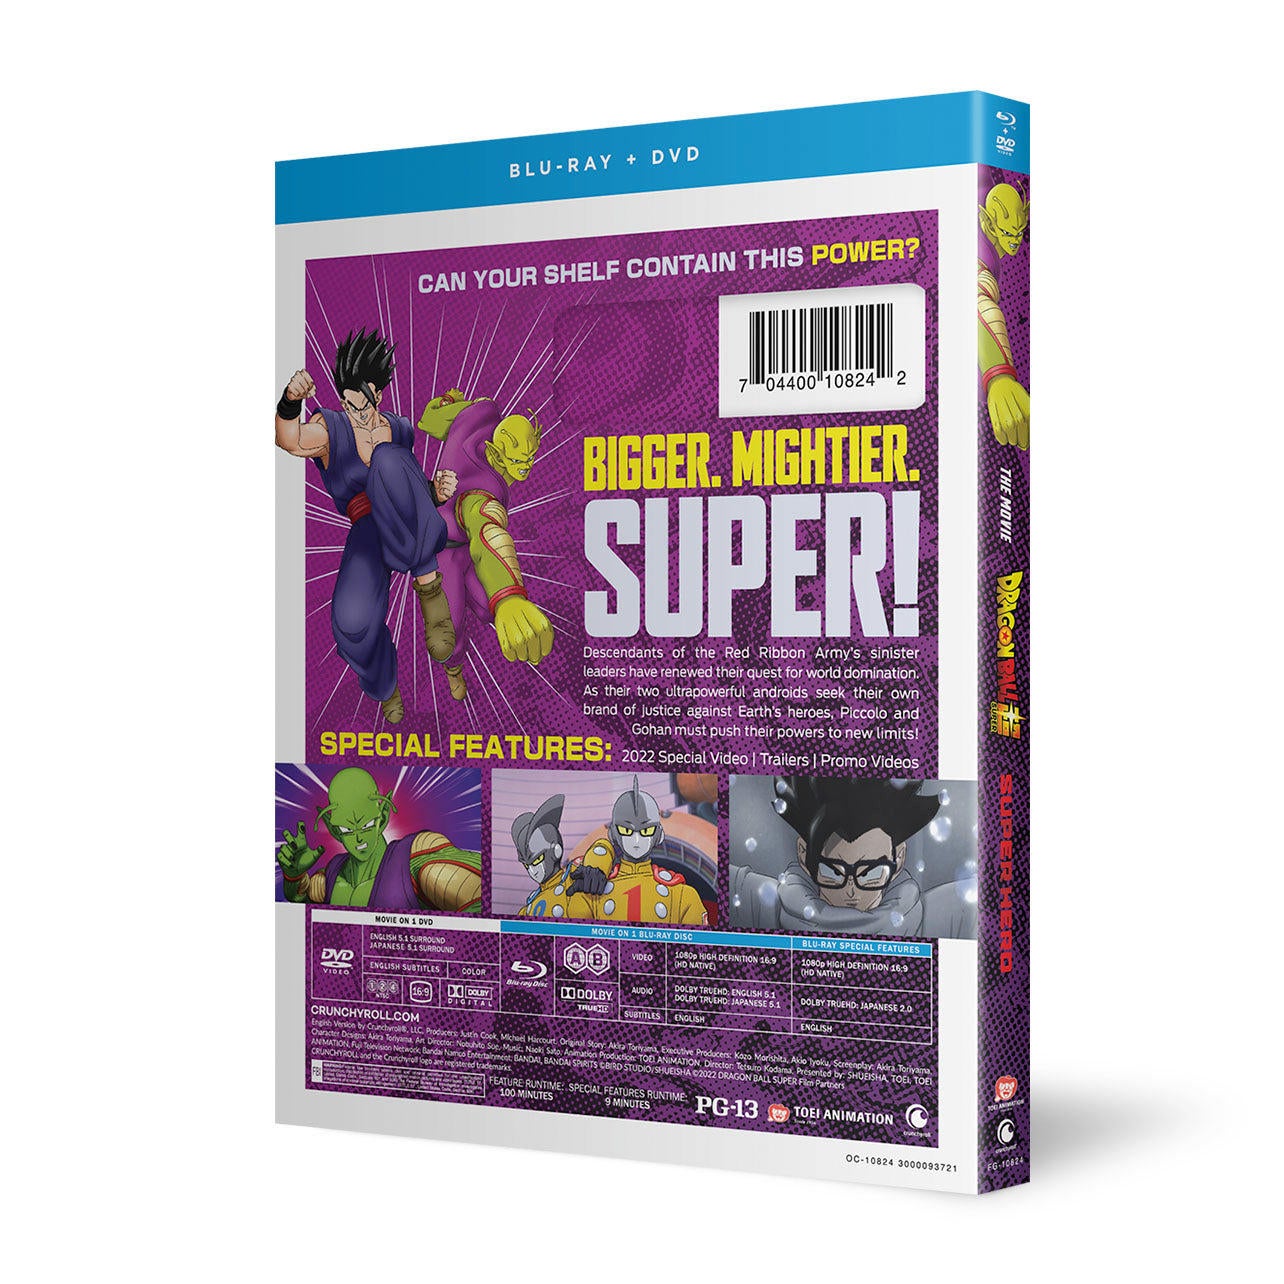 News  Japanese Dragon Ball Super: Super Hero 4K, Blu-ray, & DVD Home  Release Set for December 2022